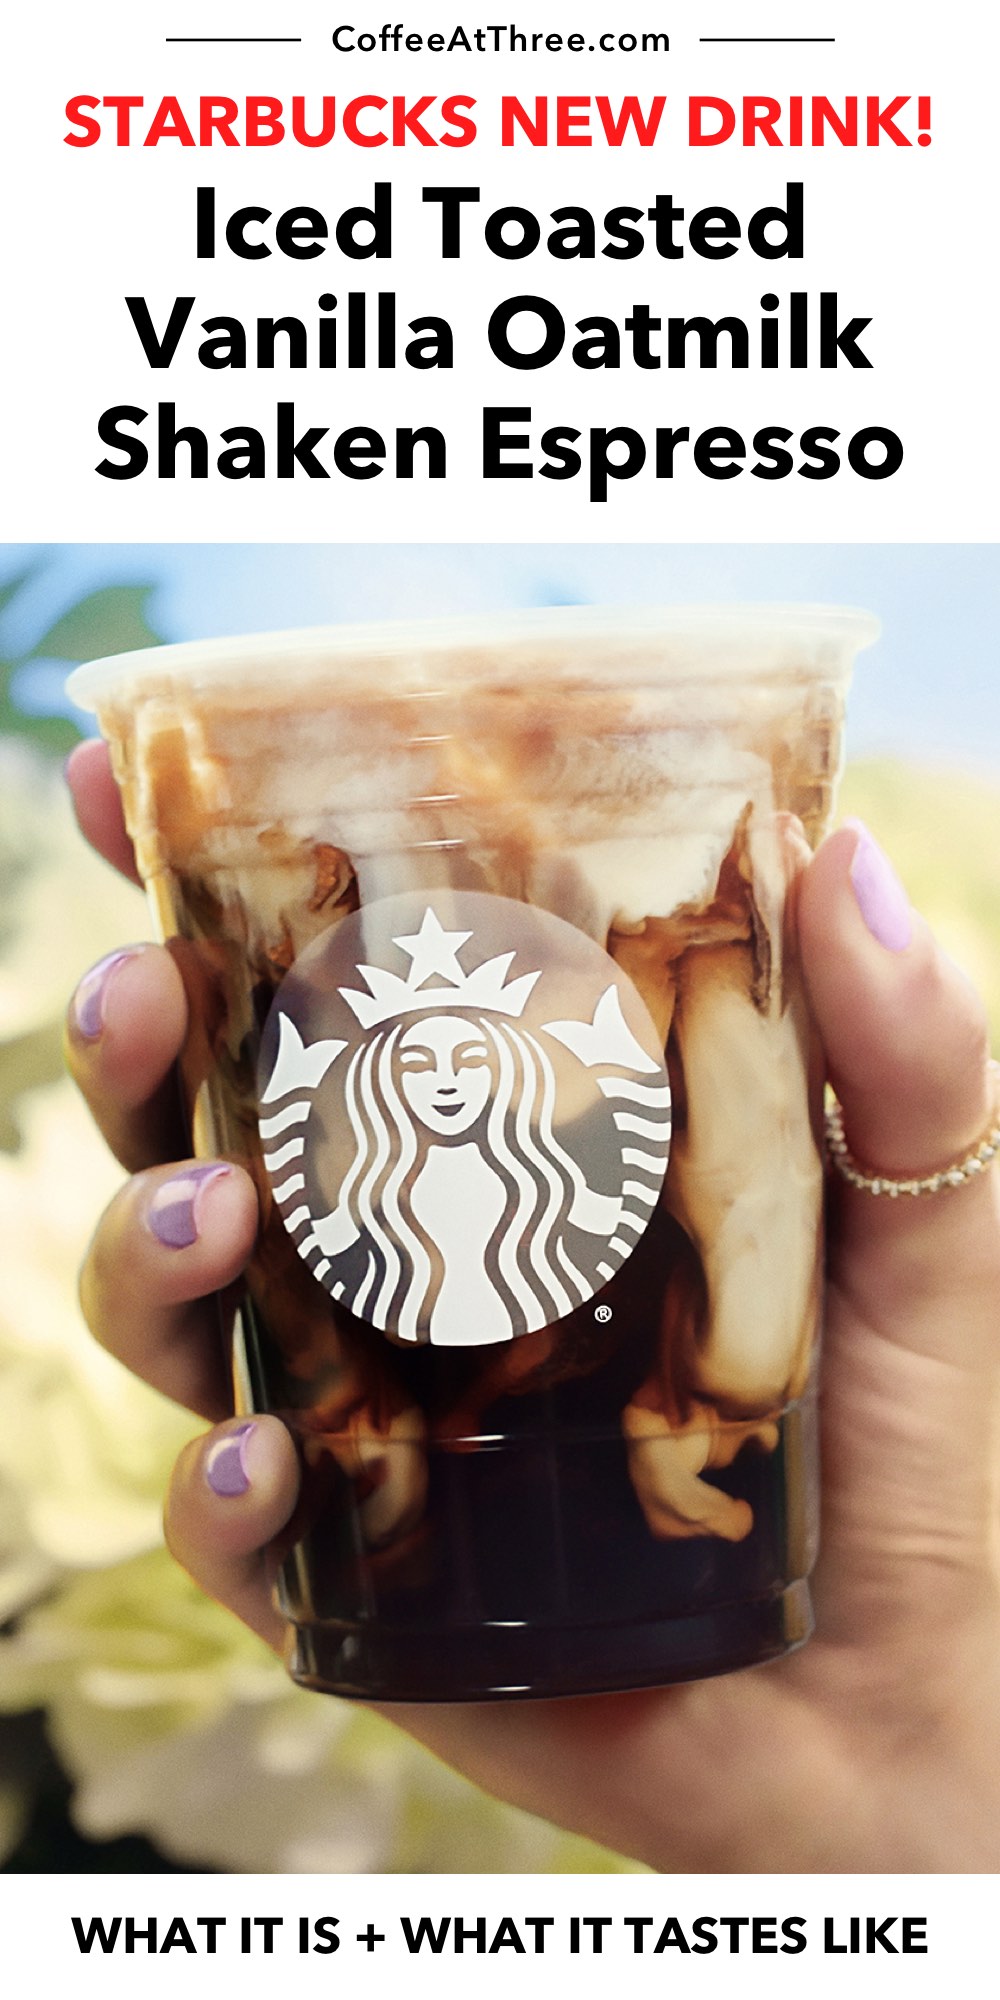 Starbucks New Drink: Iced Toasted Vanille Havermelk Shaken Espresso